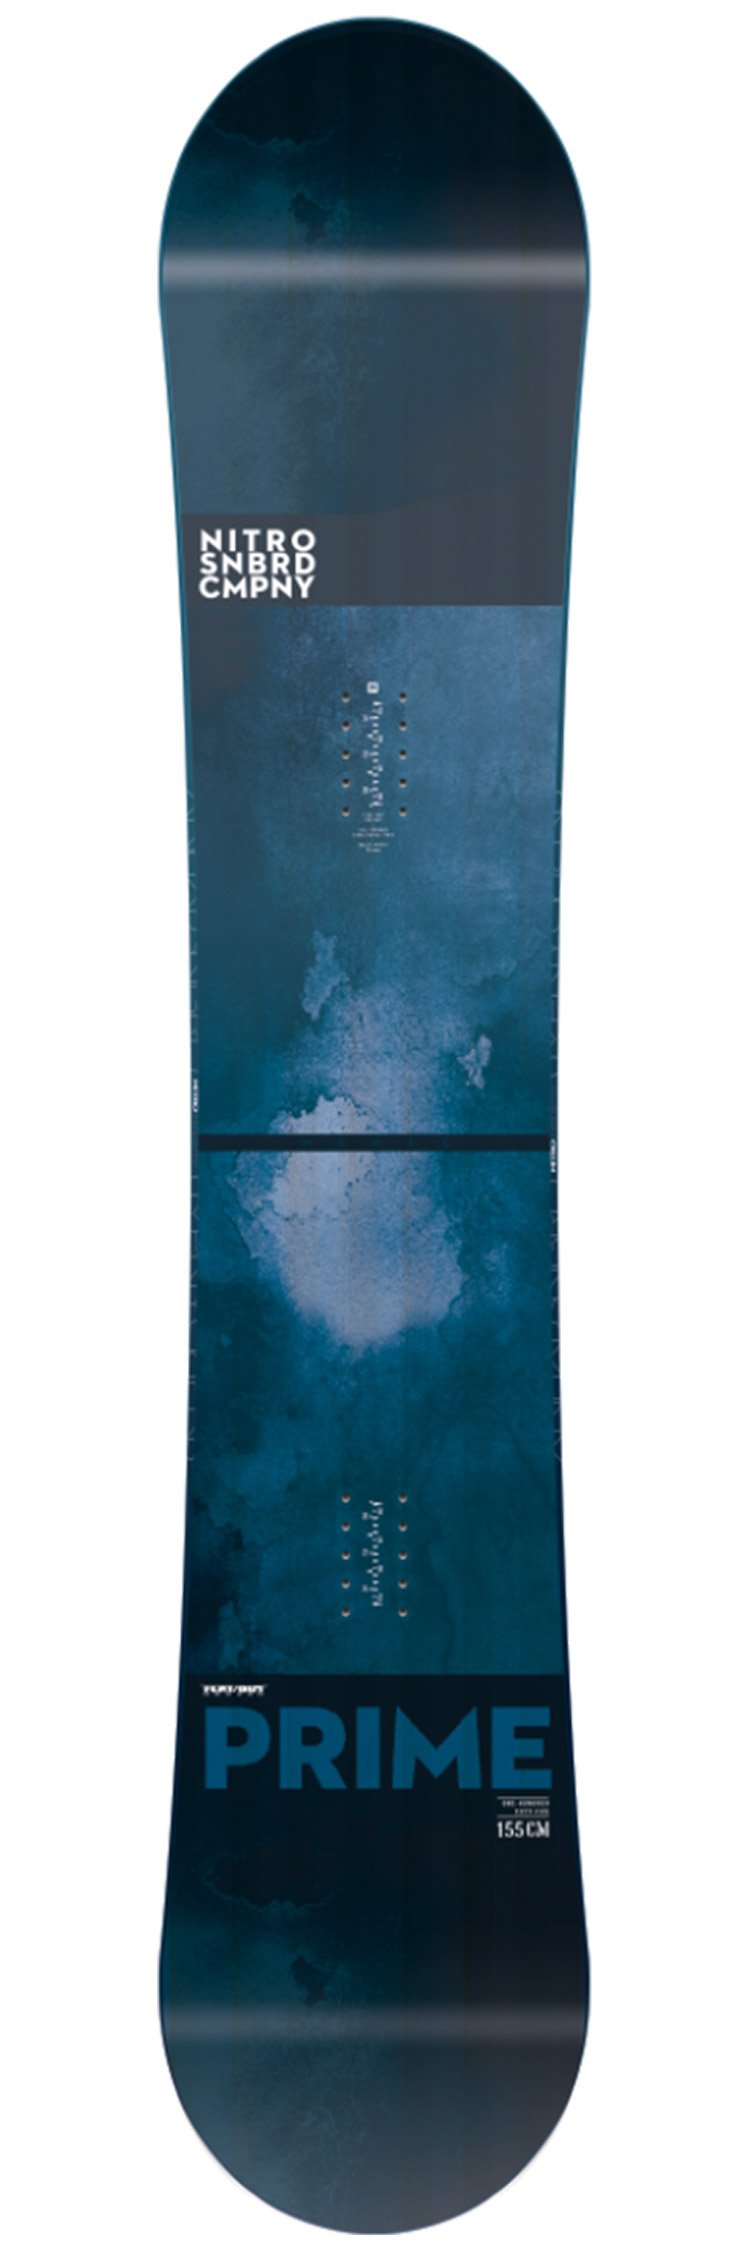 Snowboard plank Nitro Blue Winter 2018 | Glisshop